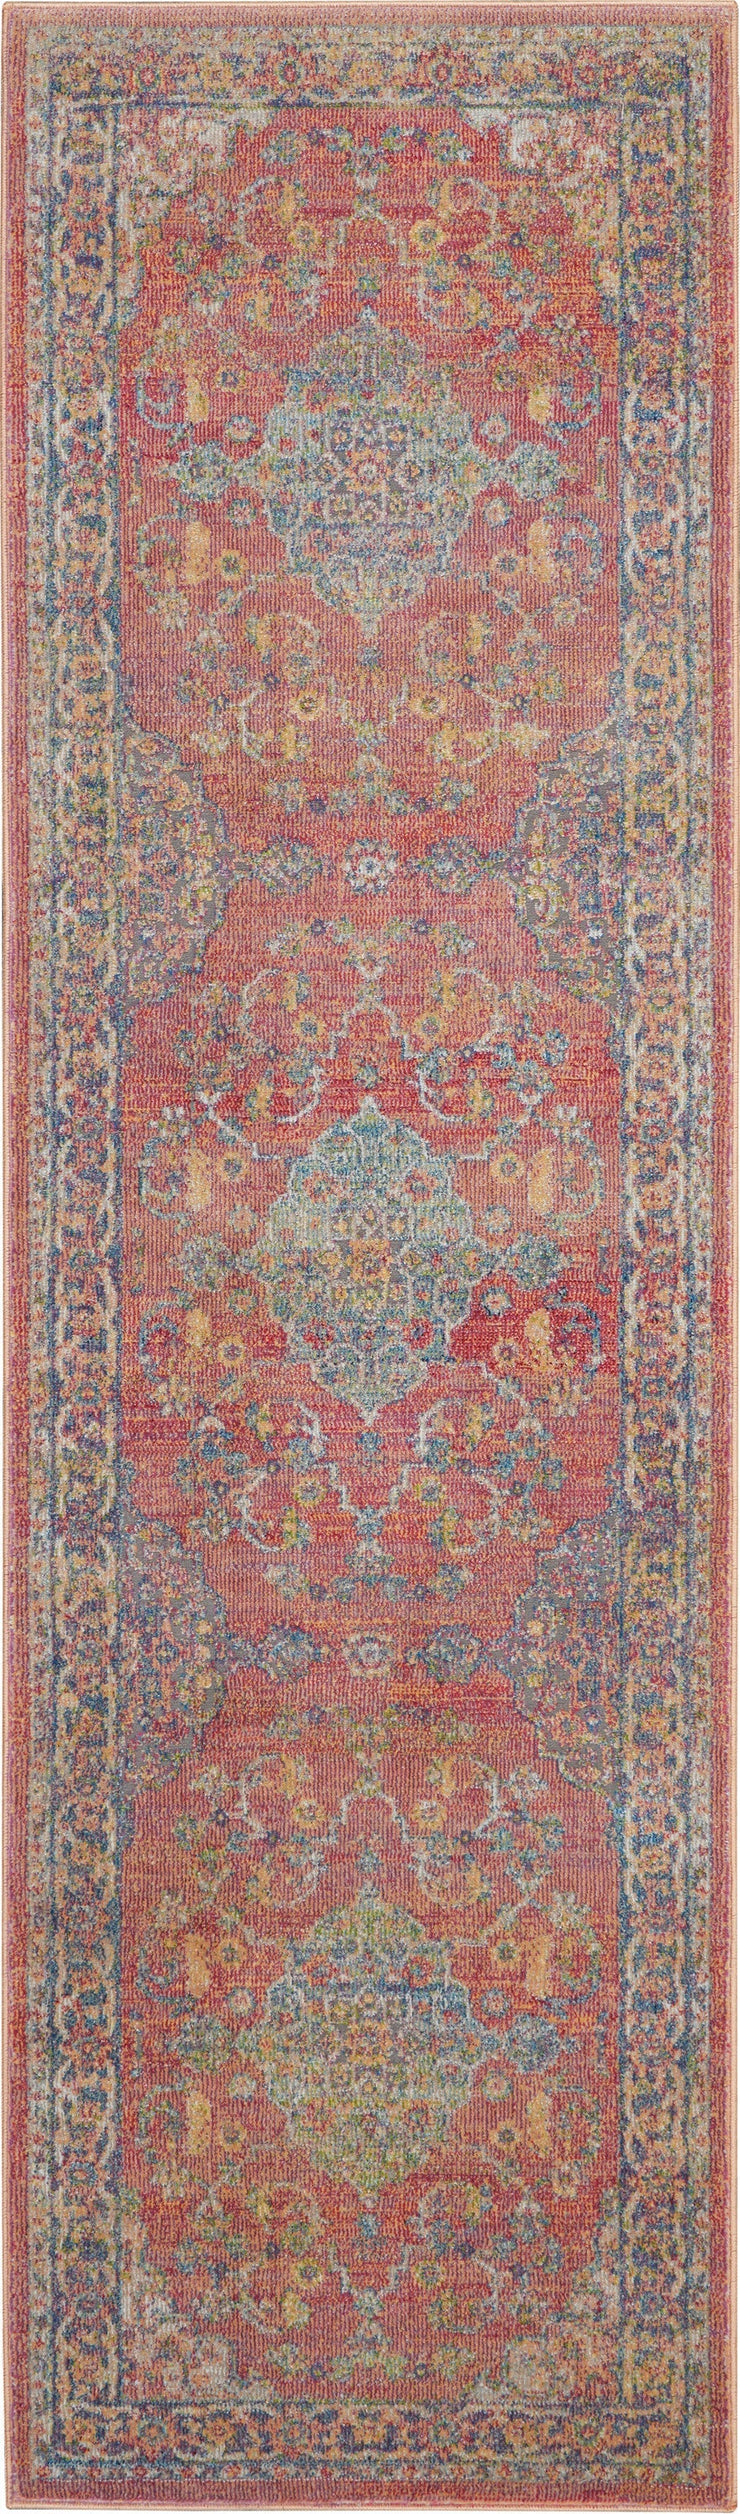 ankara global multicolor rug by nourison 99446458575 redo 3